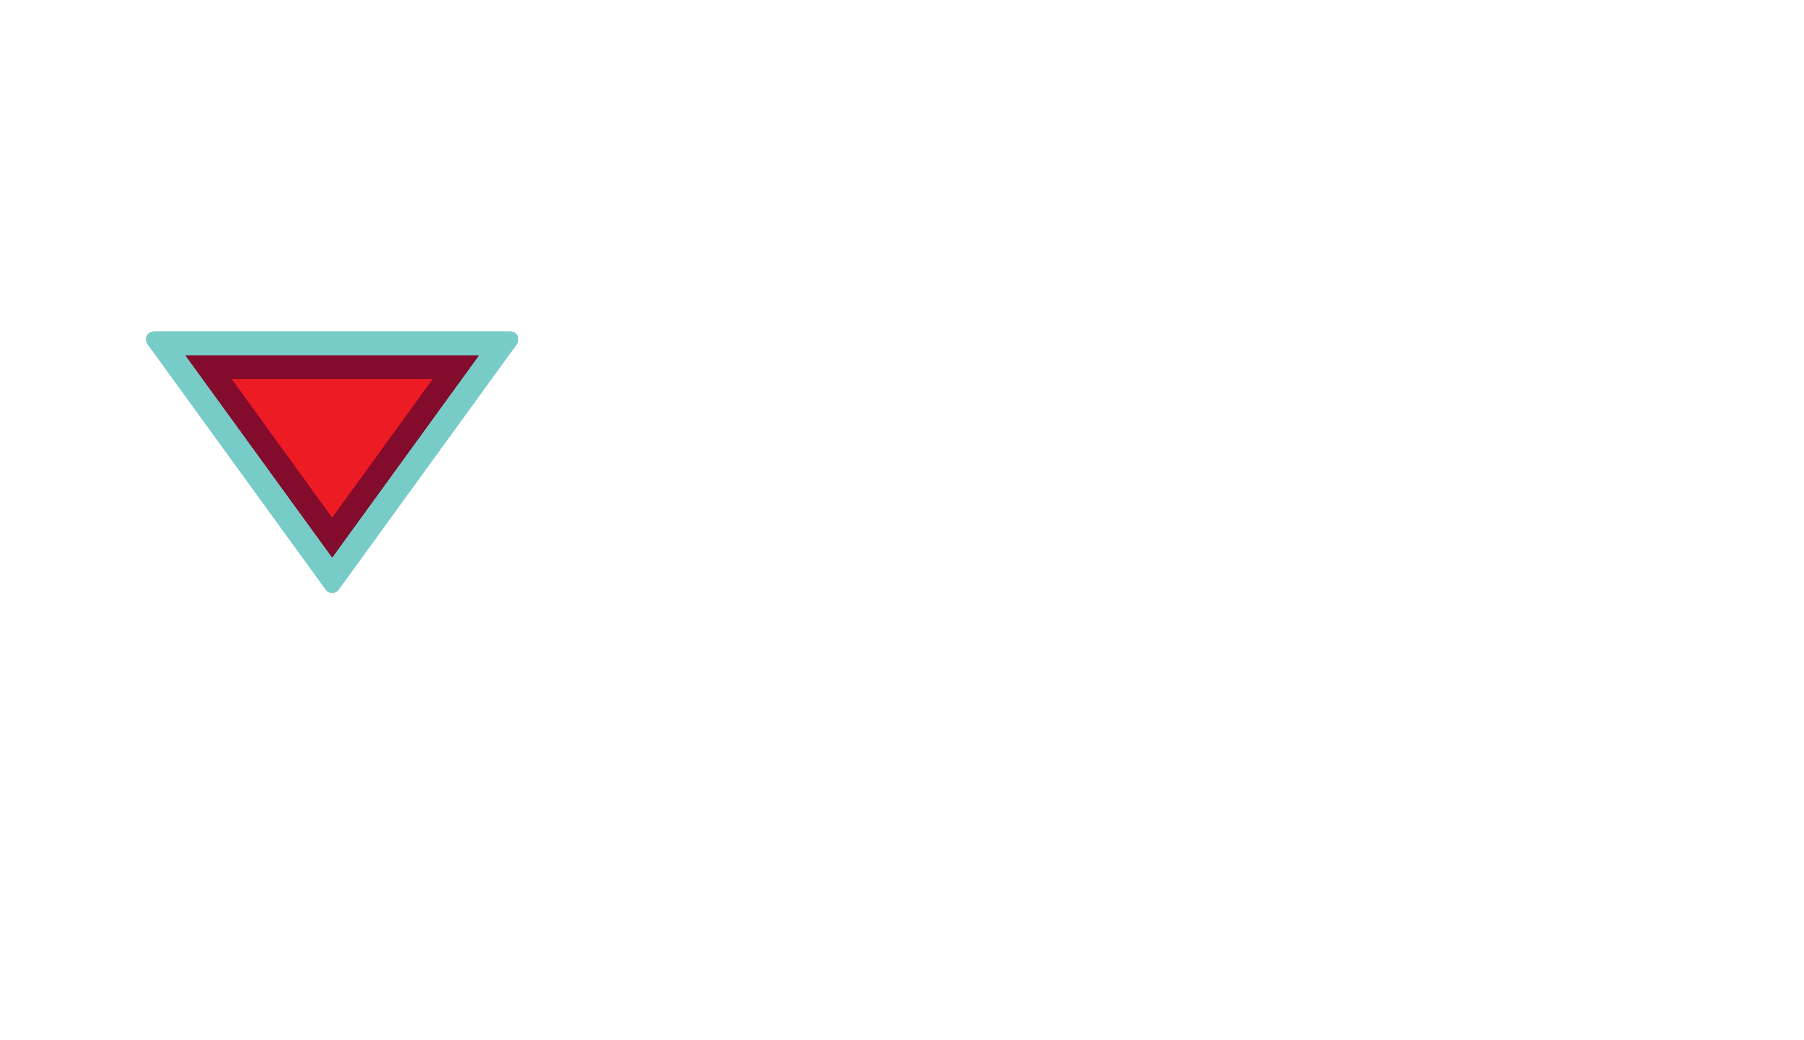 Redeem for rewards